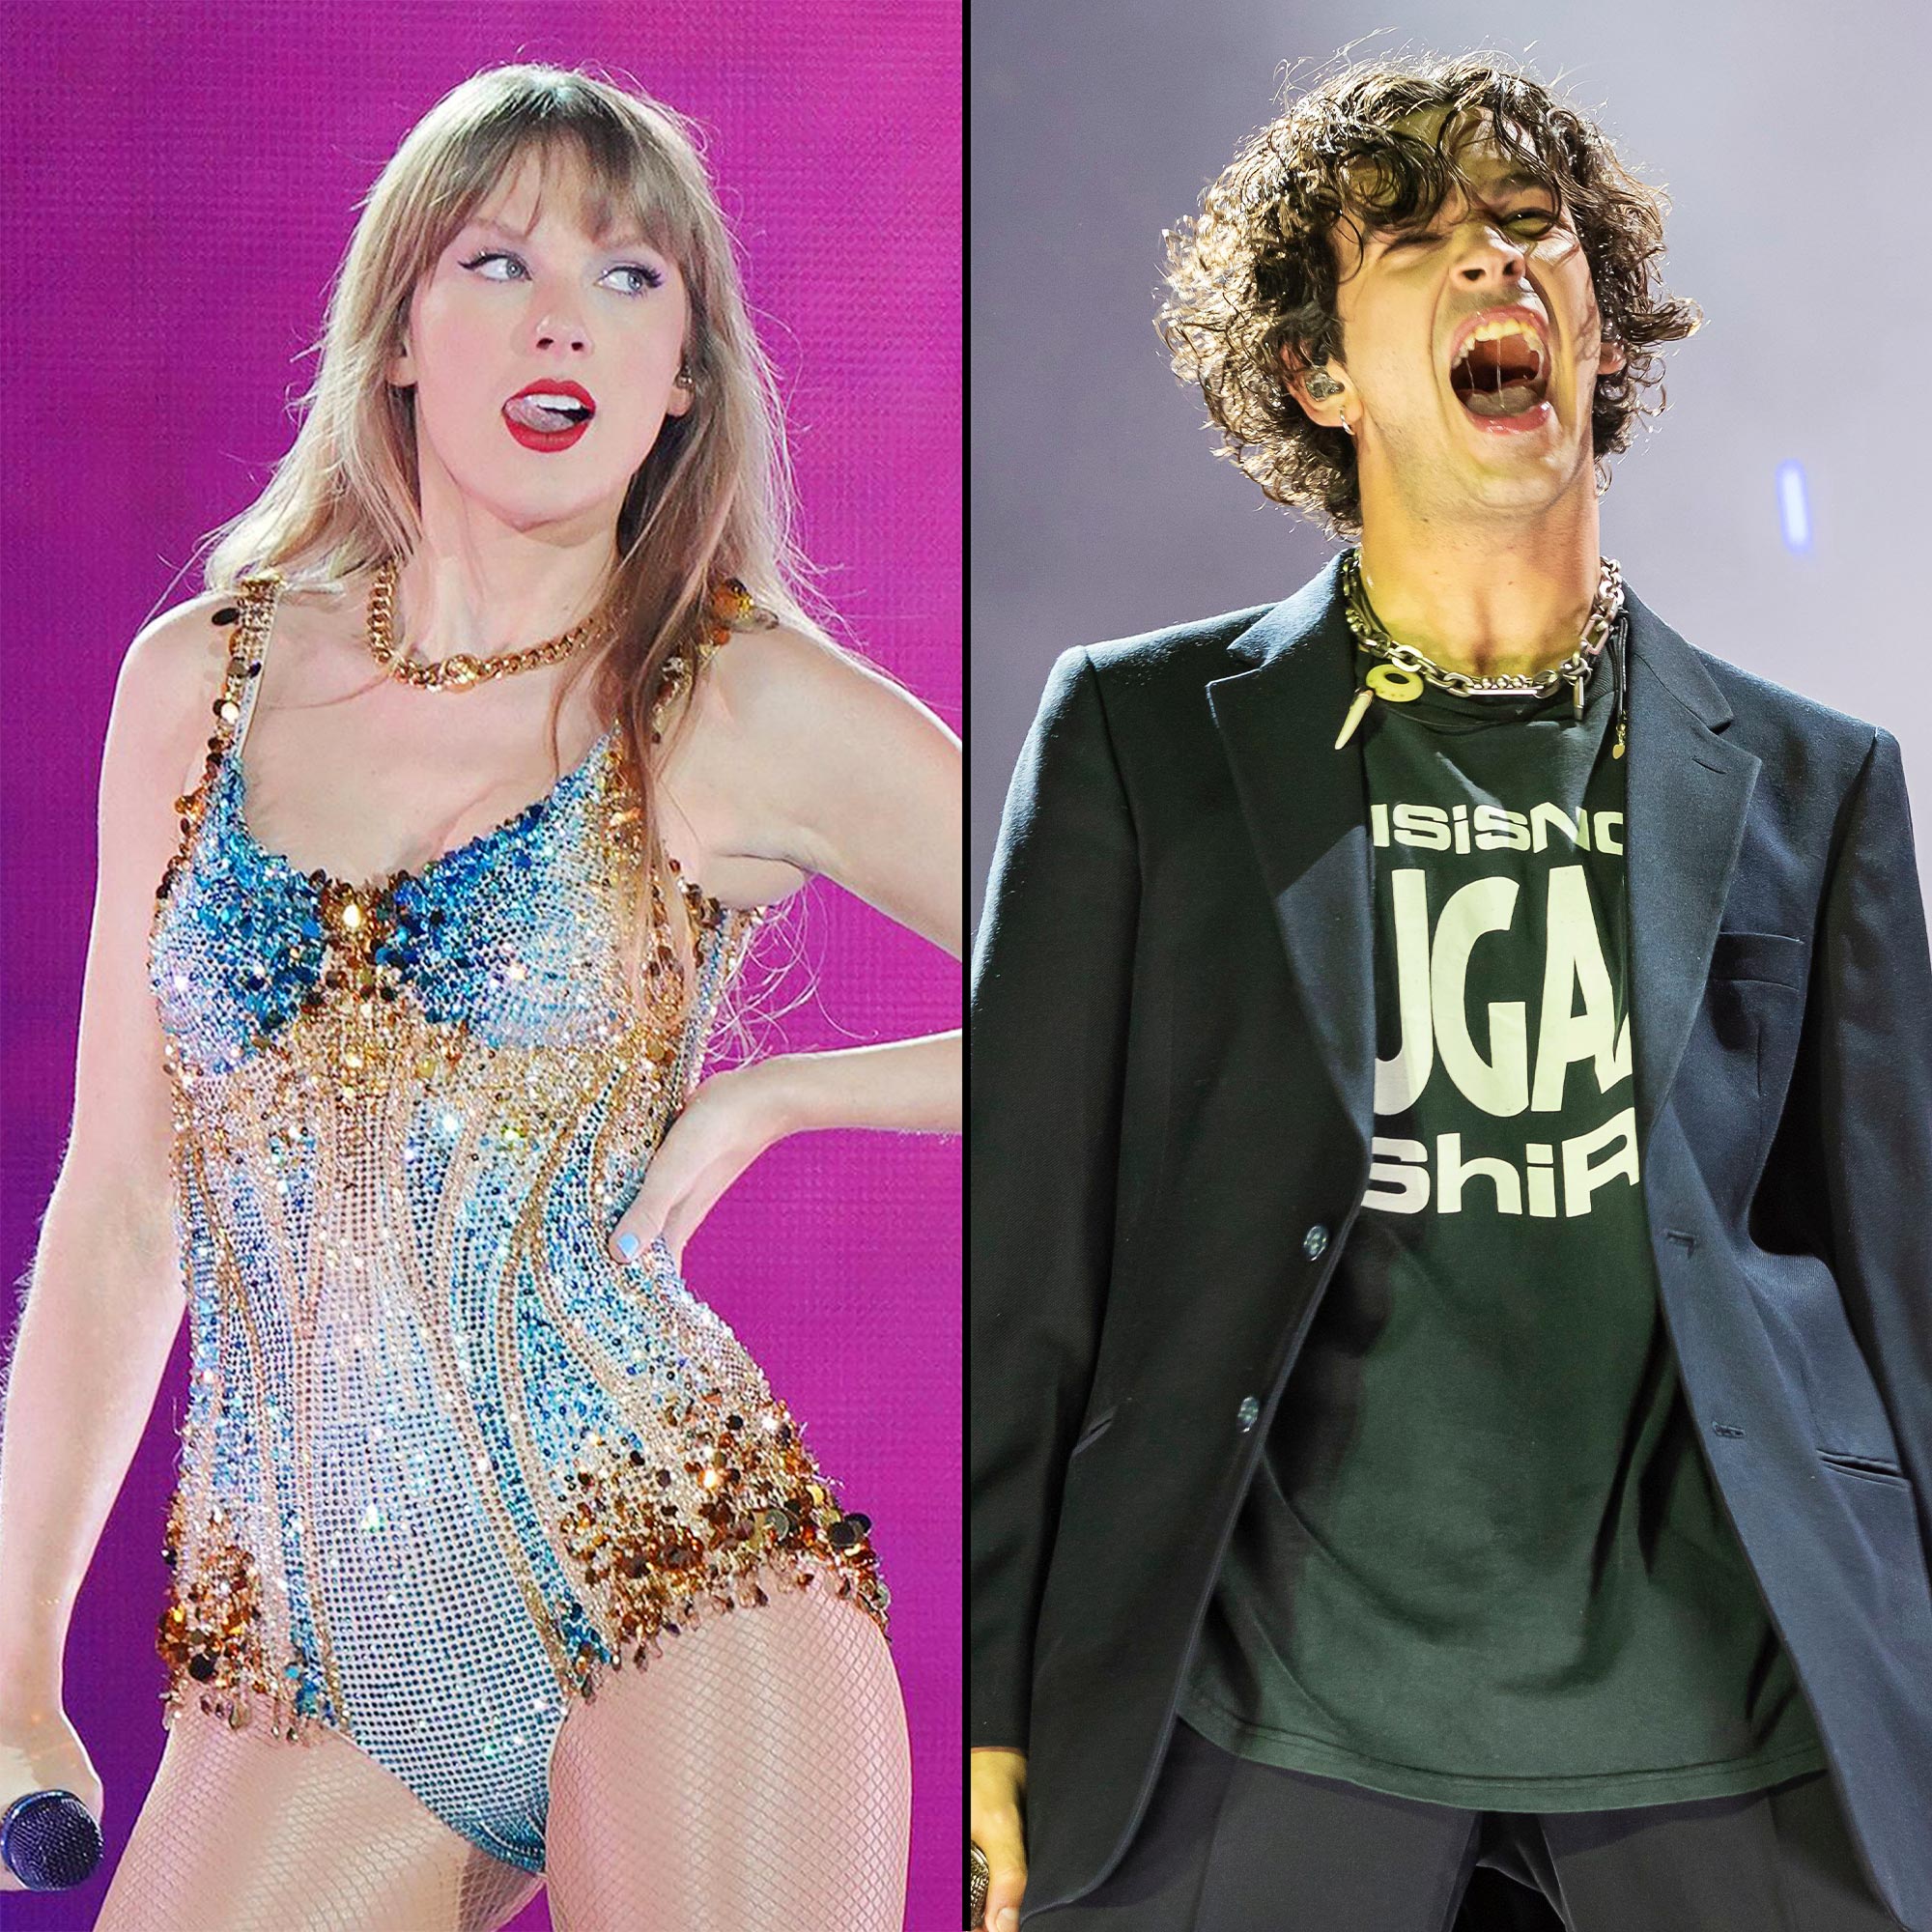 Taylor Swift, Matty Healy ‘Kiss’ Backstage at ‘Eras Tour’ News Leaflets